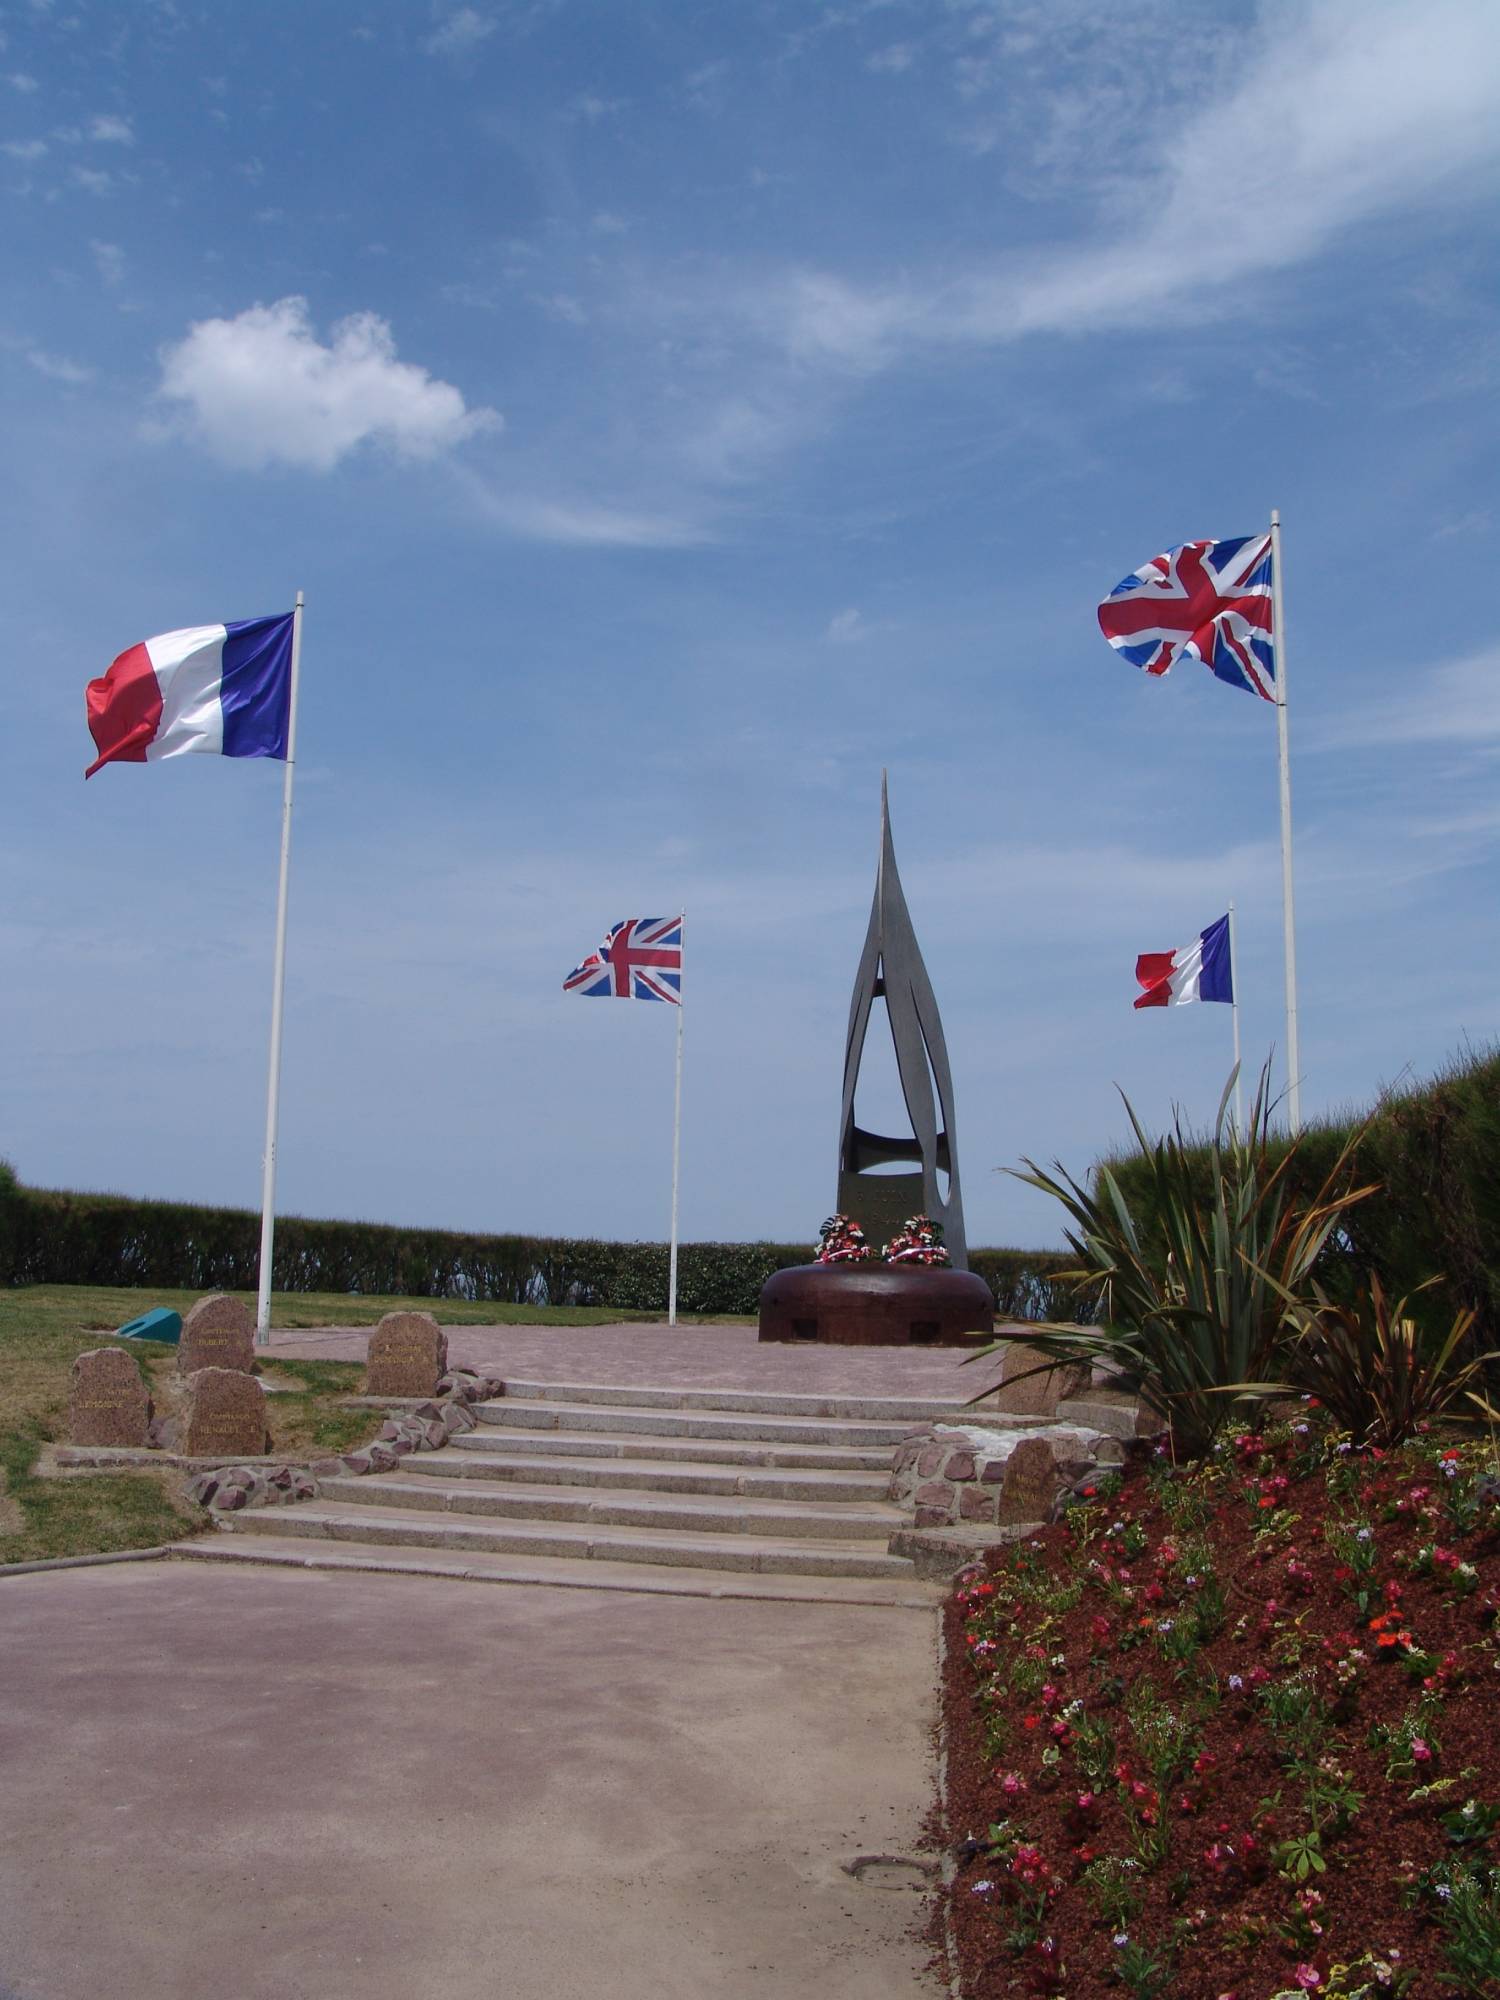 Explore the history of the beaches of Normandy |PassPorter.com